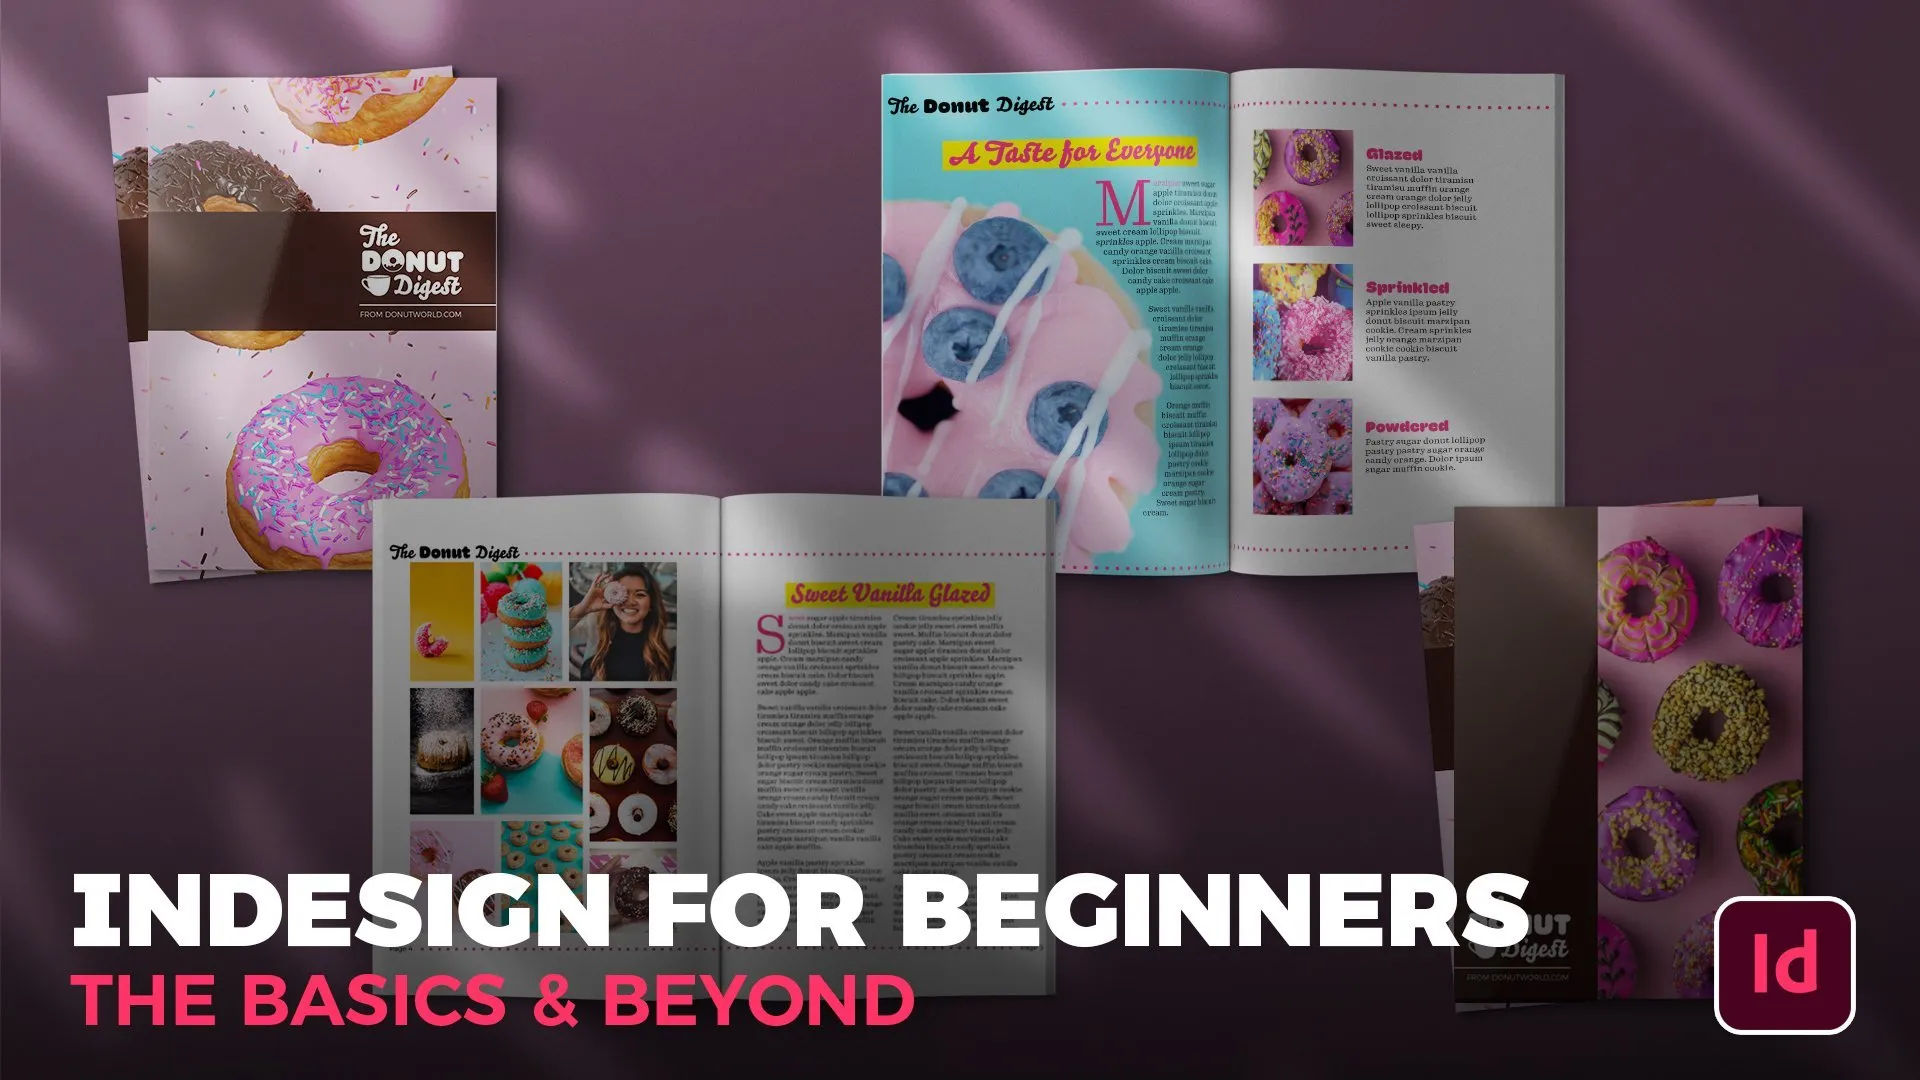 Adobe InDesign Basics for Beginners